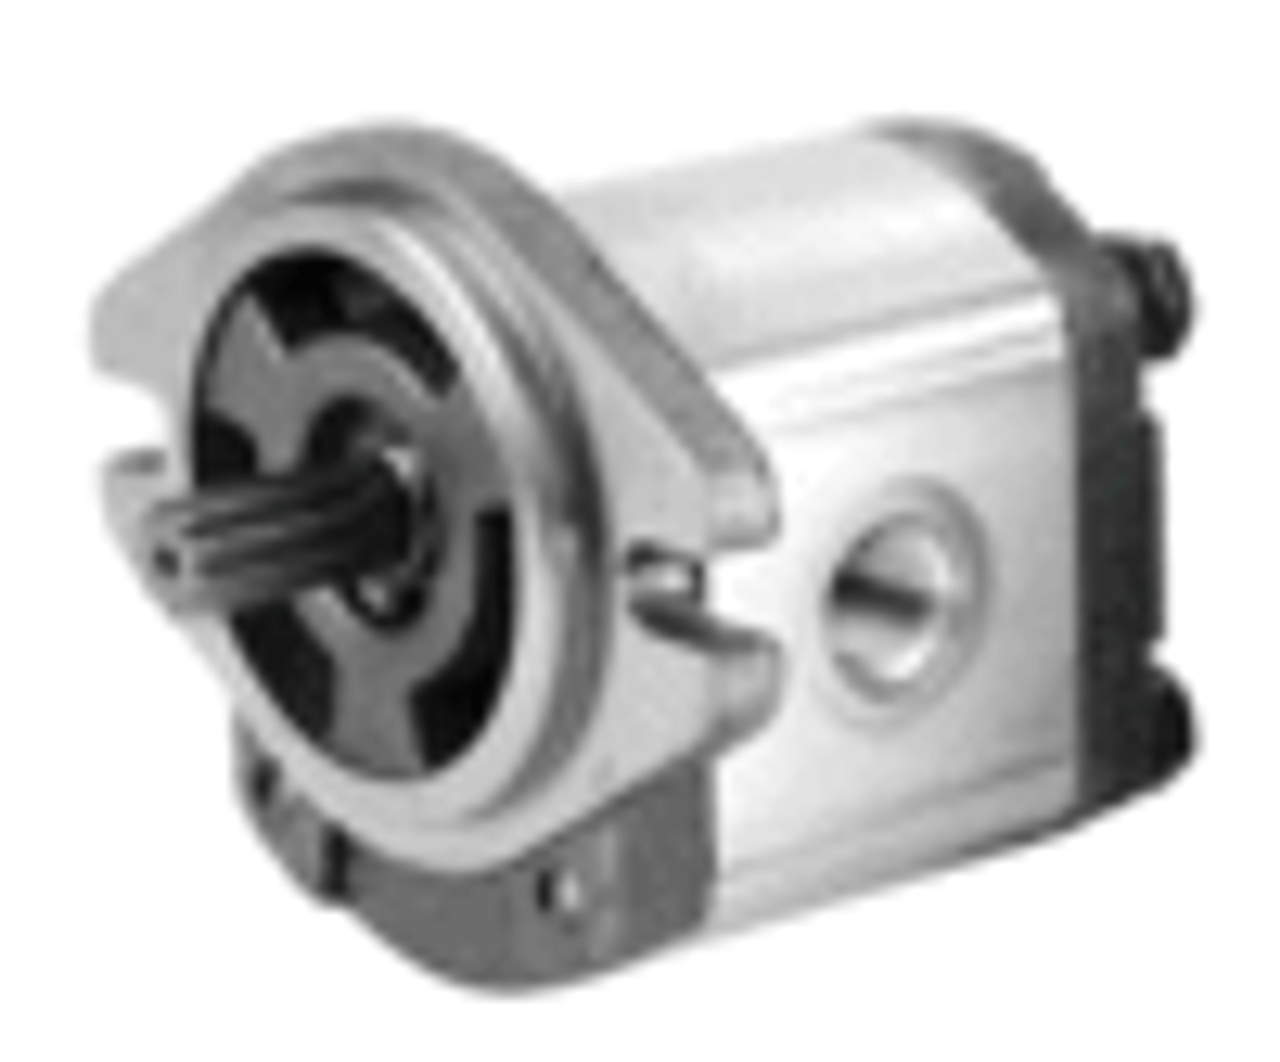 Honor Pumps 2GG2U06L-V Hydraulic gear pump .37 cubic inch displacement 9T spline shaft